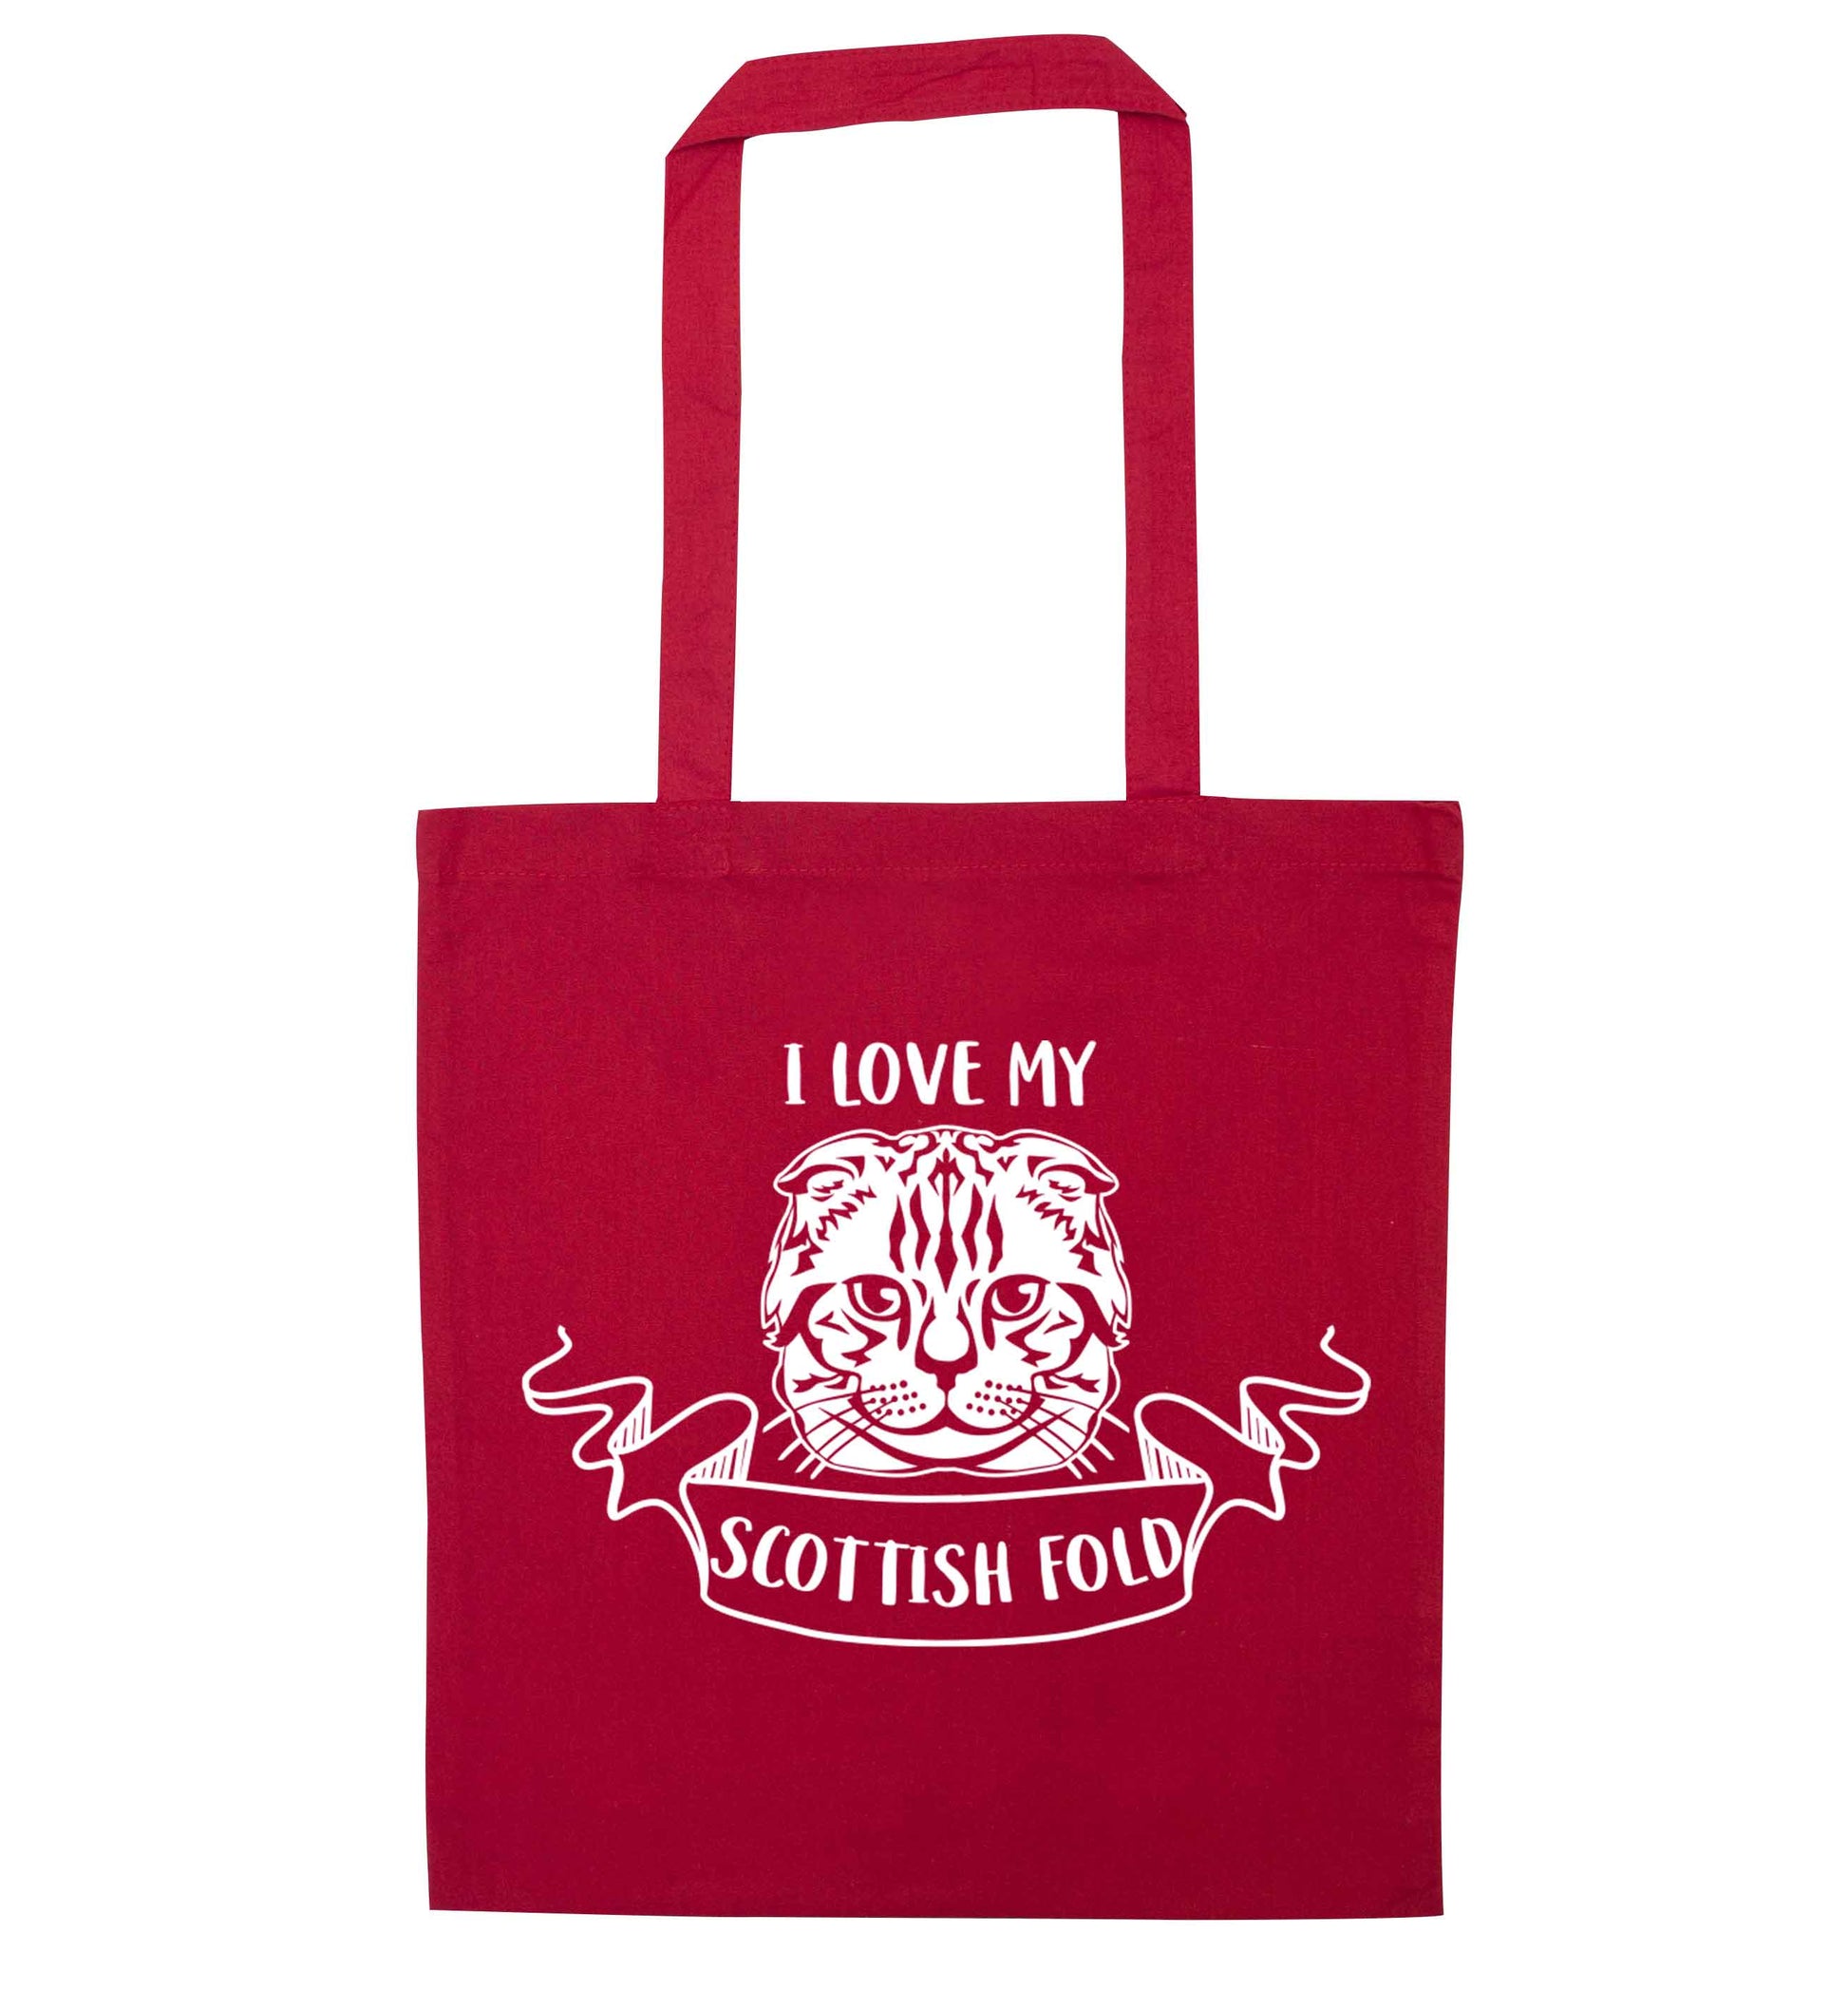 I love my scottish fold cat red tote bag